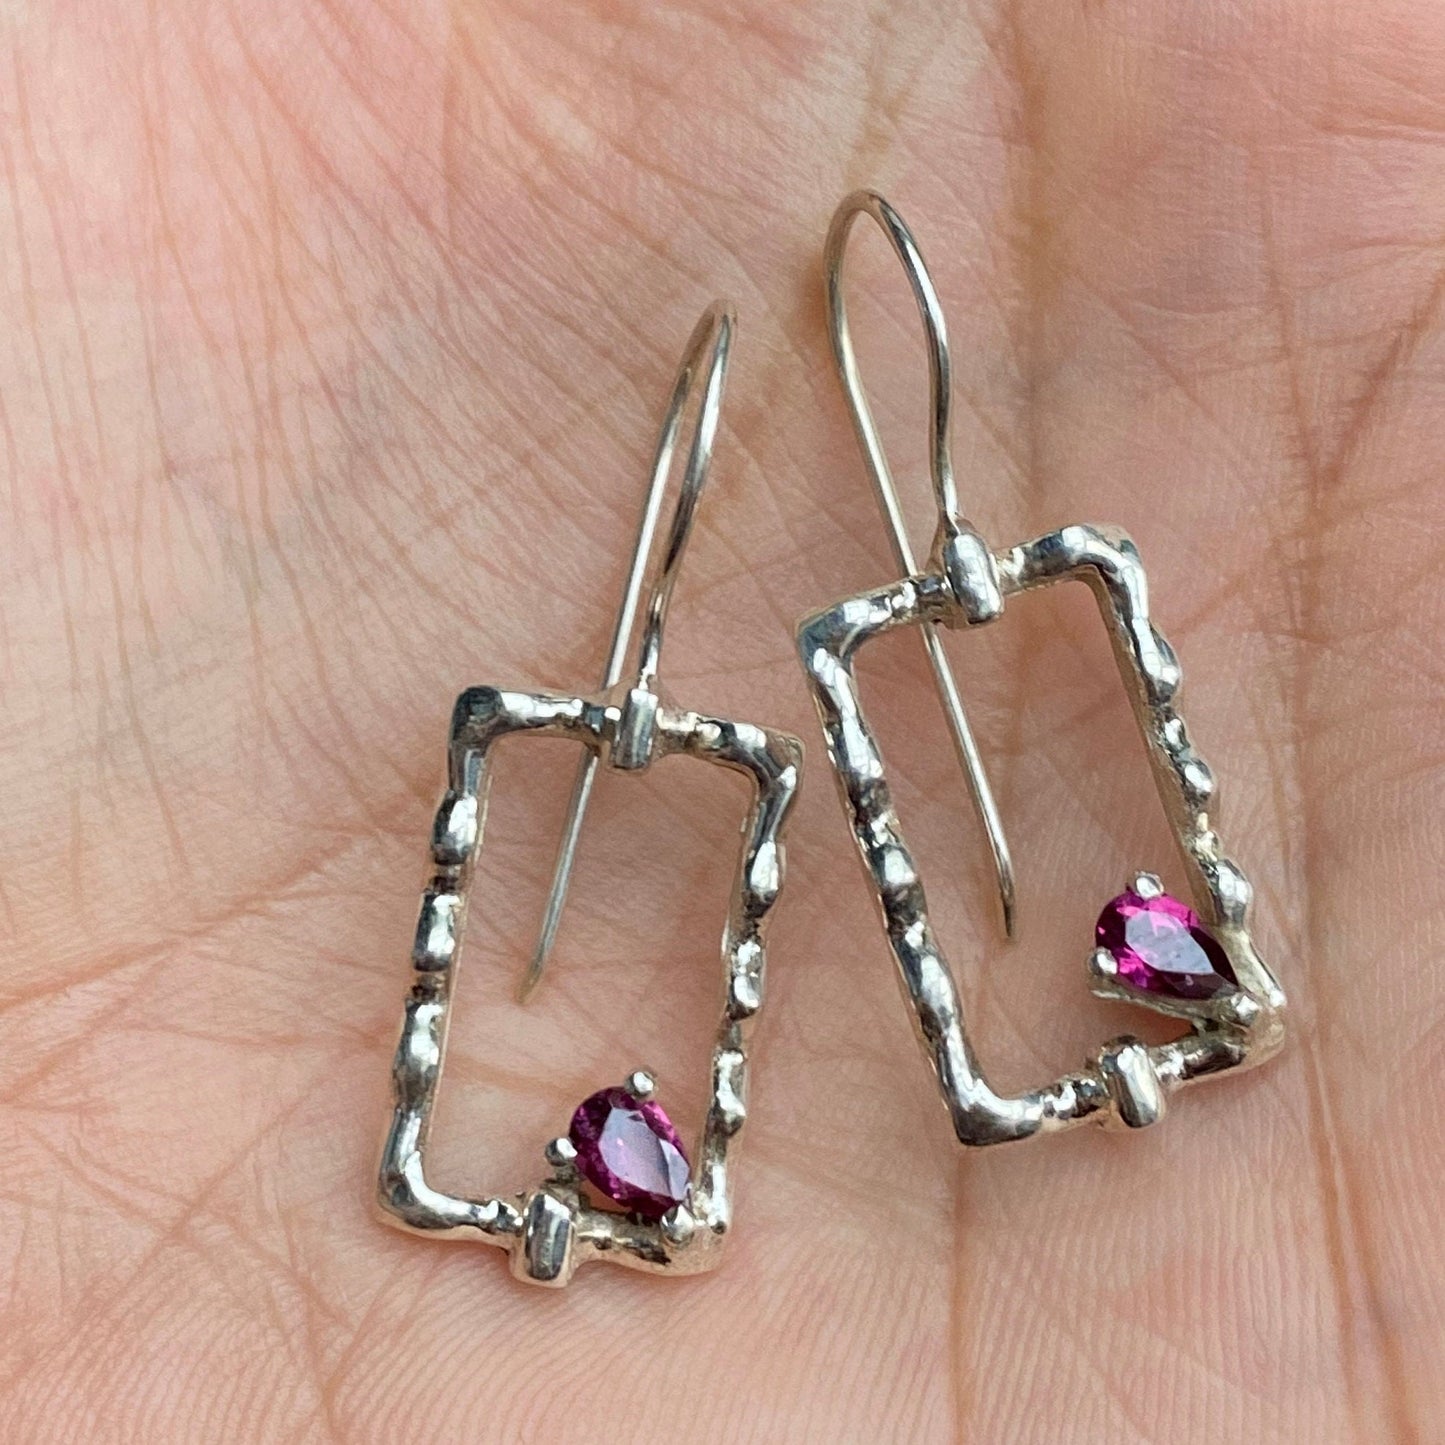 Rhodolite Garnet Earrings, Sterling Silver Earrings, Red Pink Gemstone Earrings, January Birthstone, Birthday Gifts For Her